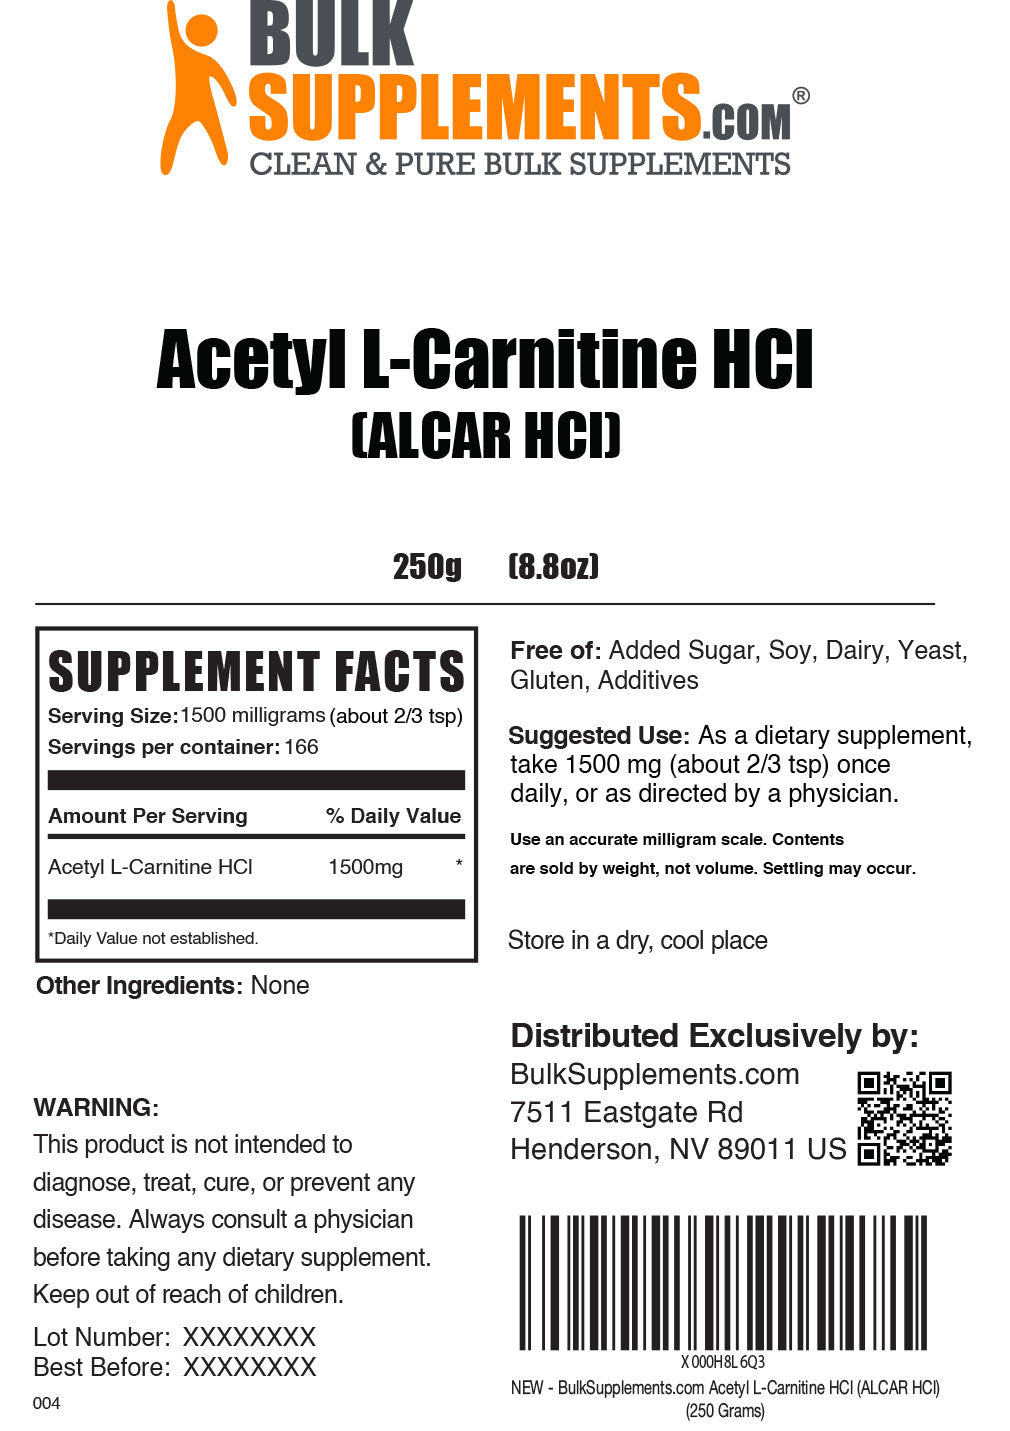 ALCAR HCl Label 250g